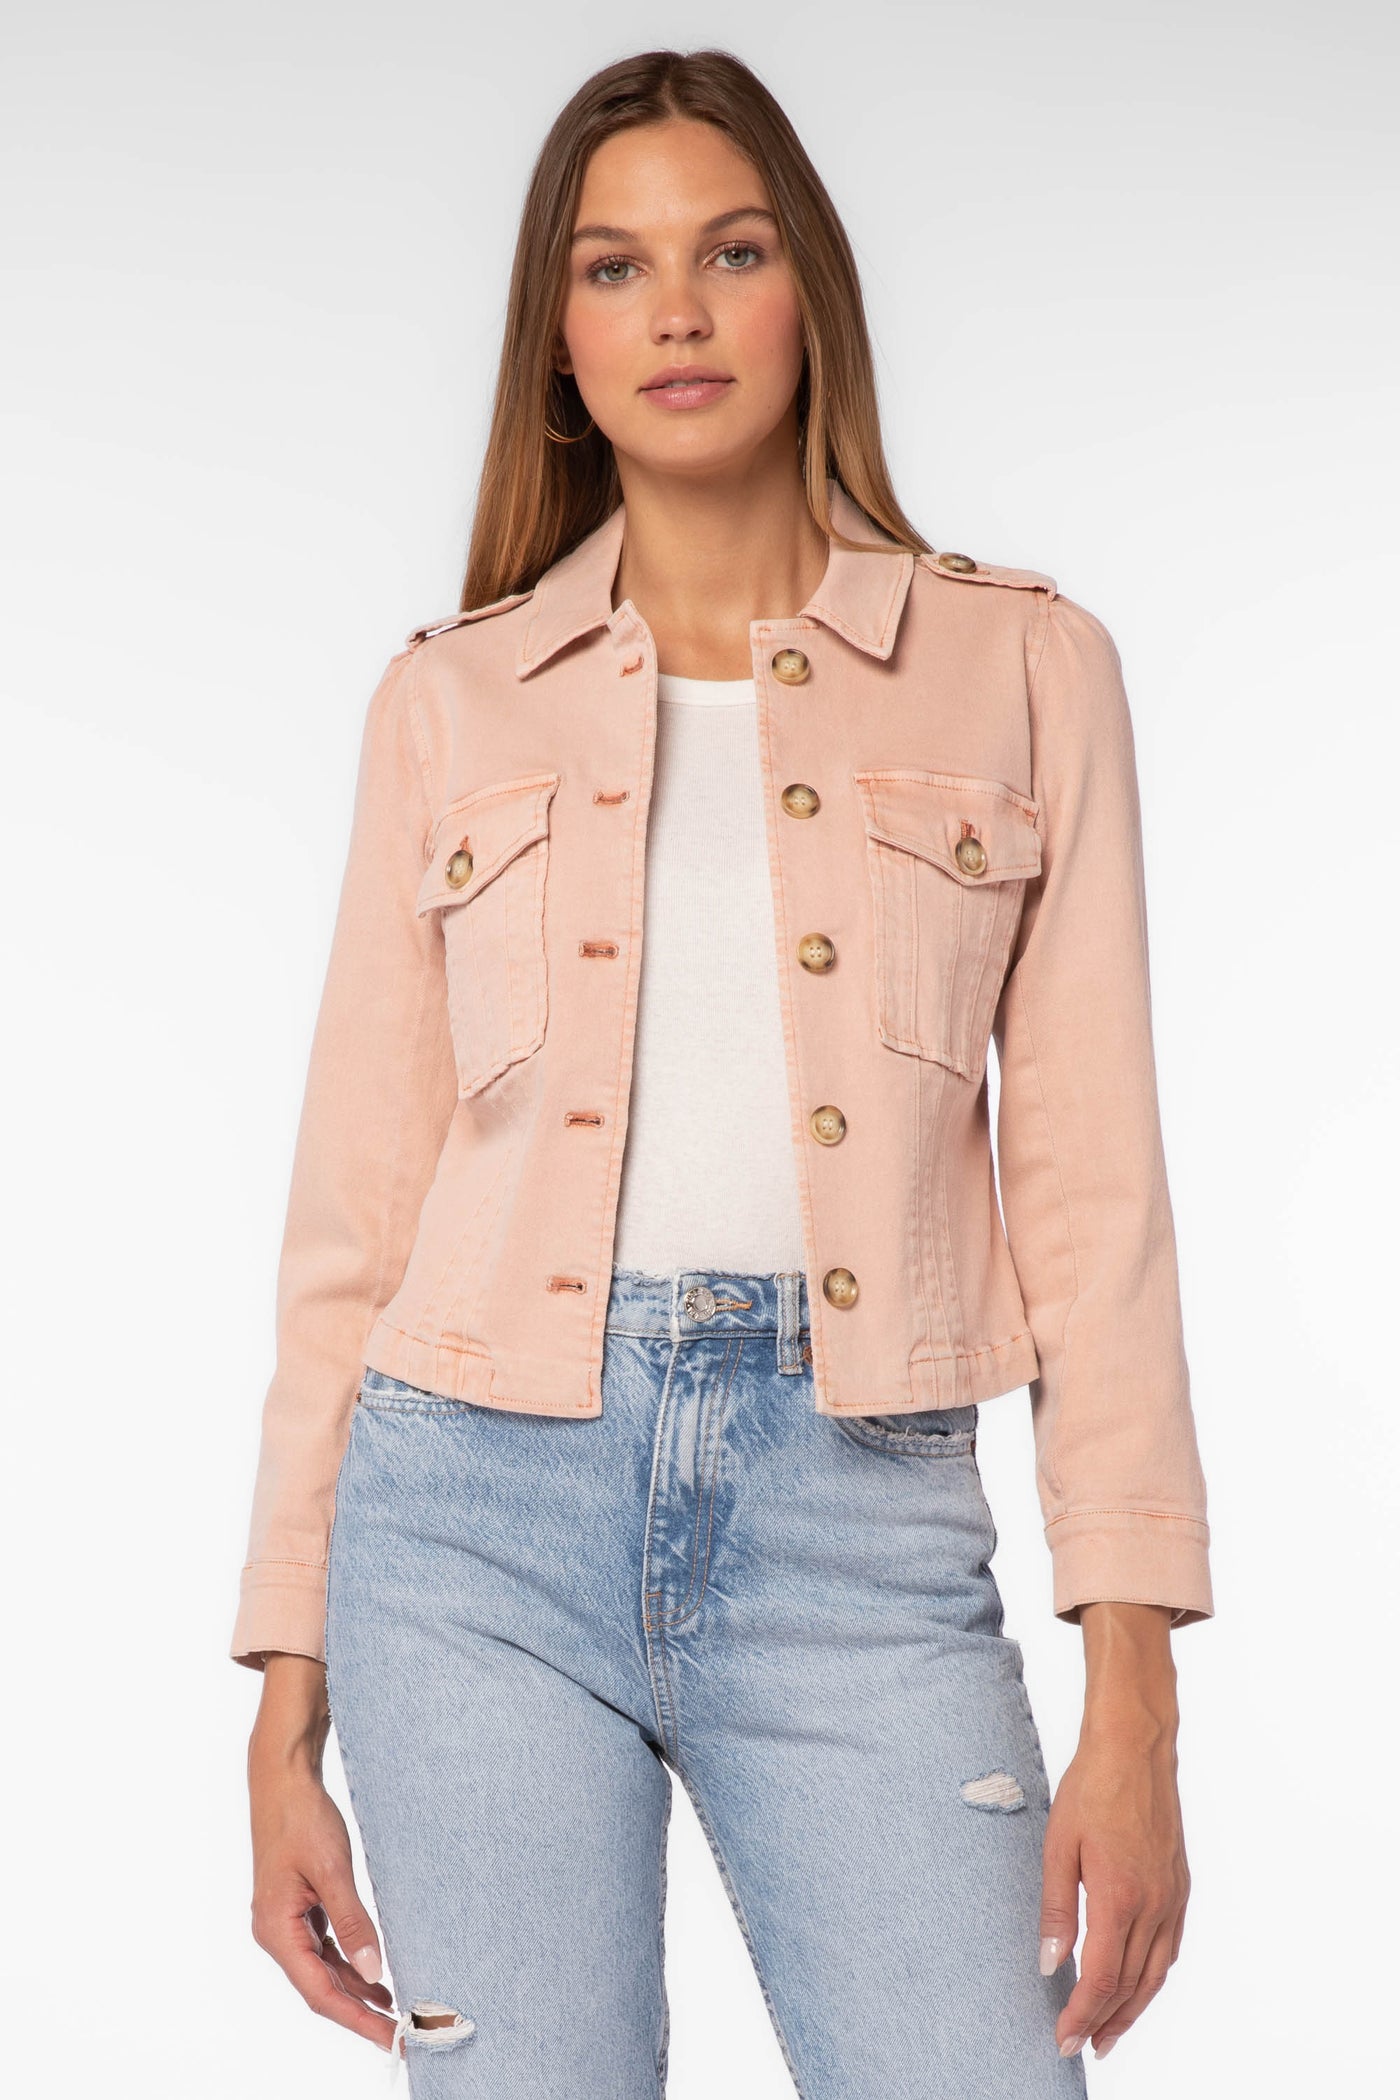 Collin Pink Jacket - Jackets & Outerwear - Velvet Heart Clothing